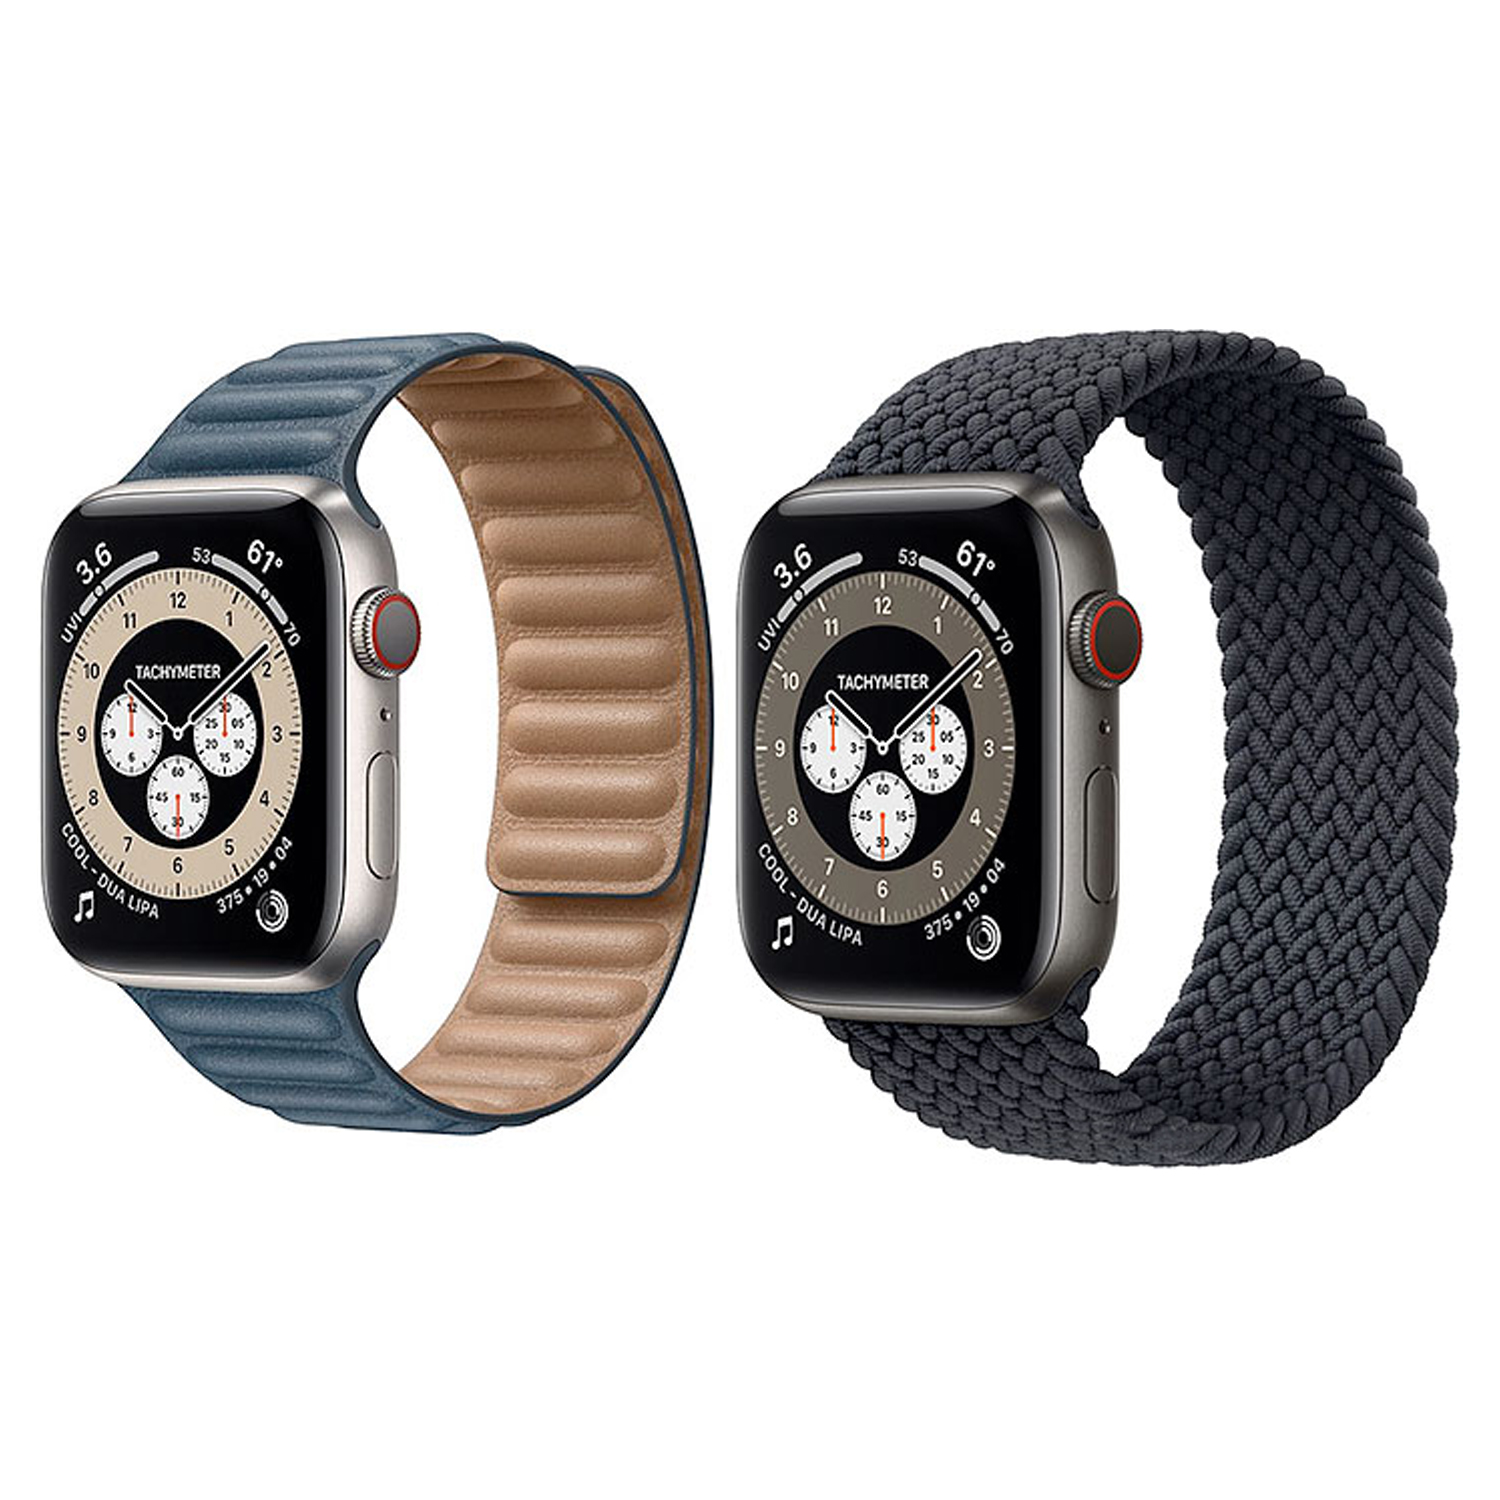 Apple Watch Edition Series 6 2